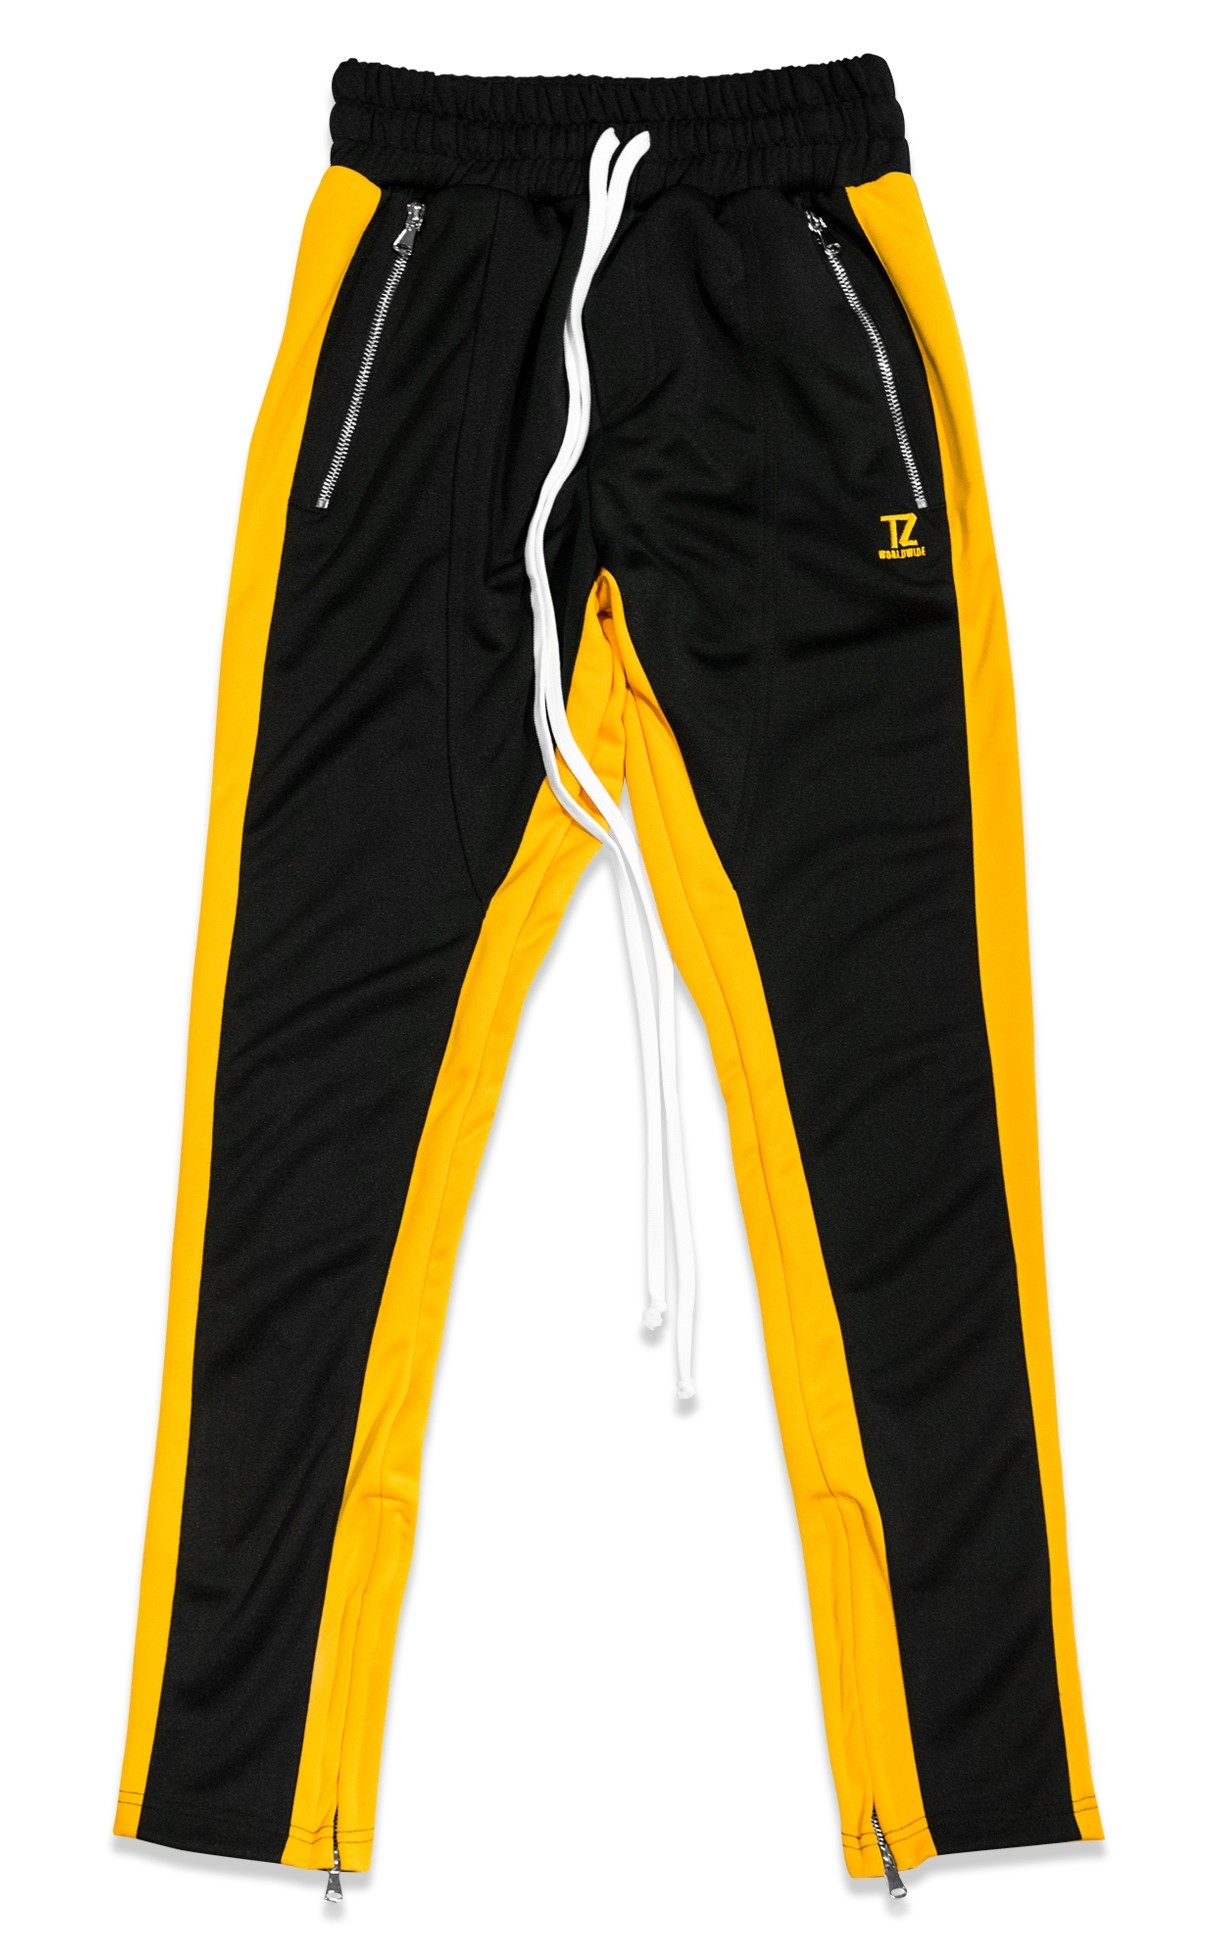 black pants with yellow stripe